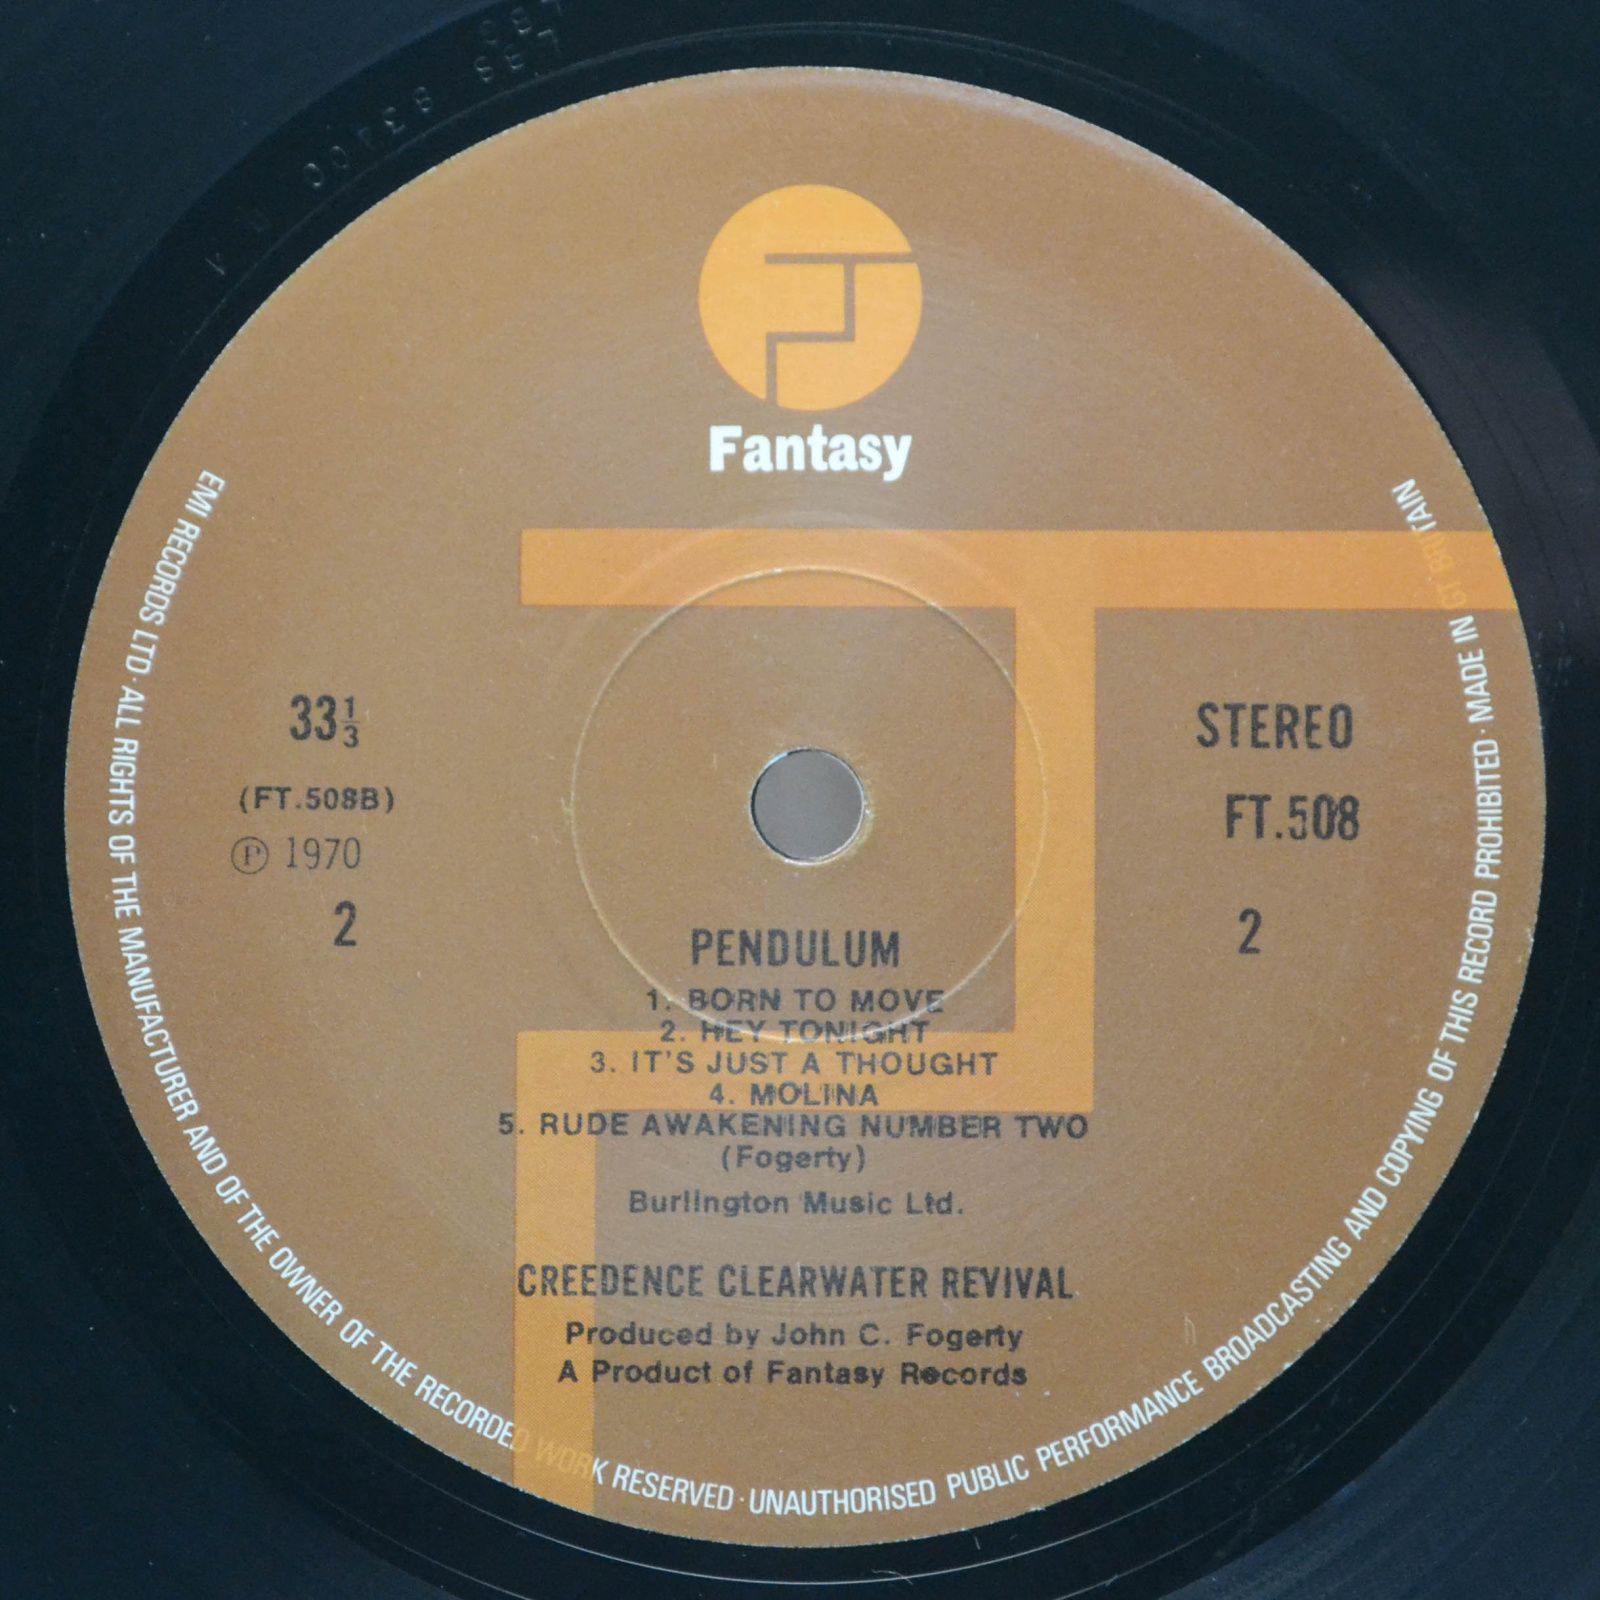 Creedence Clearwater Revival — Pendulum (UK), 1970